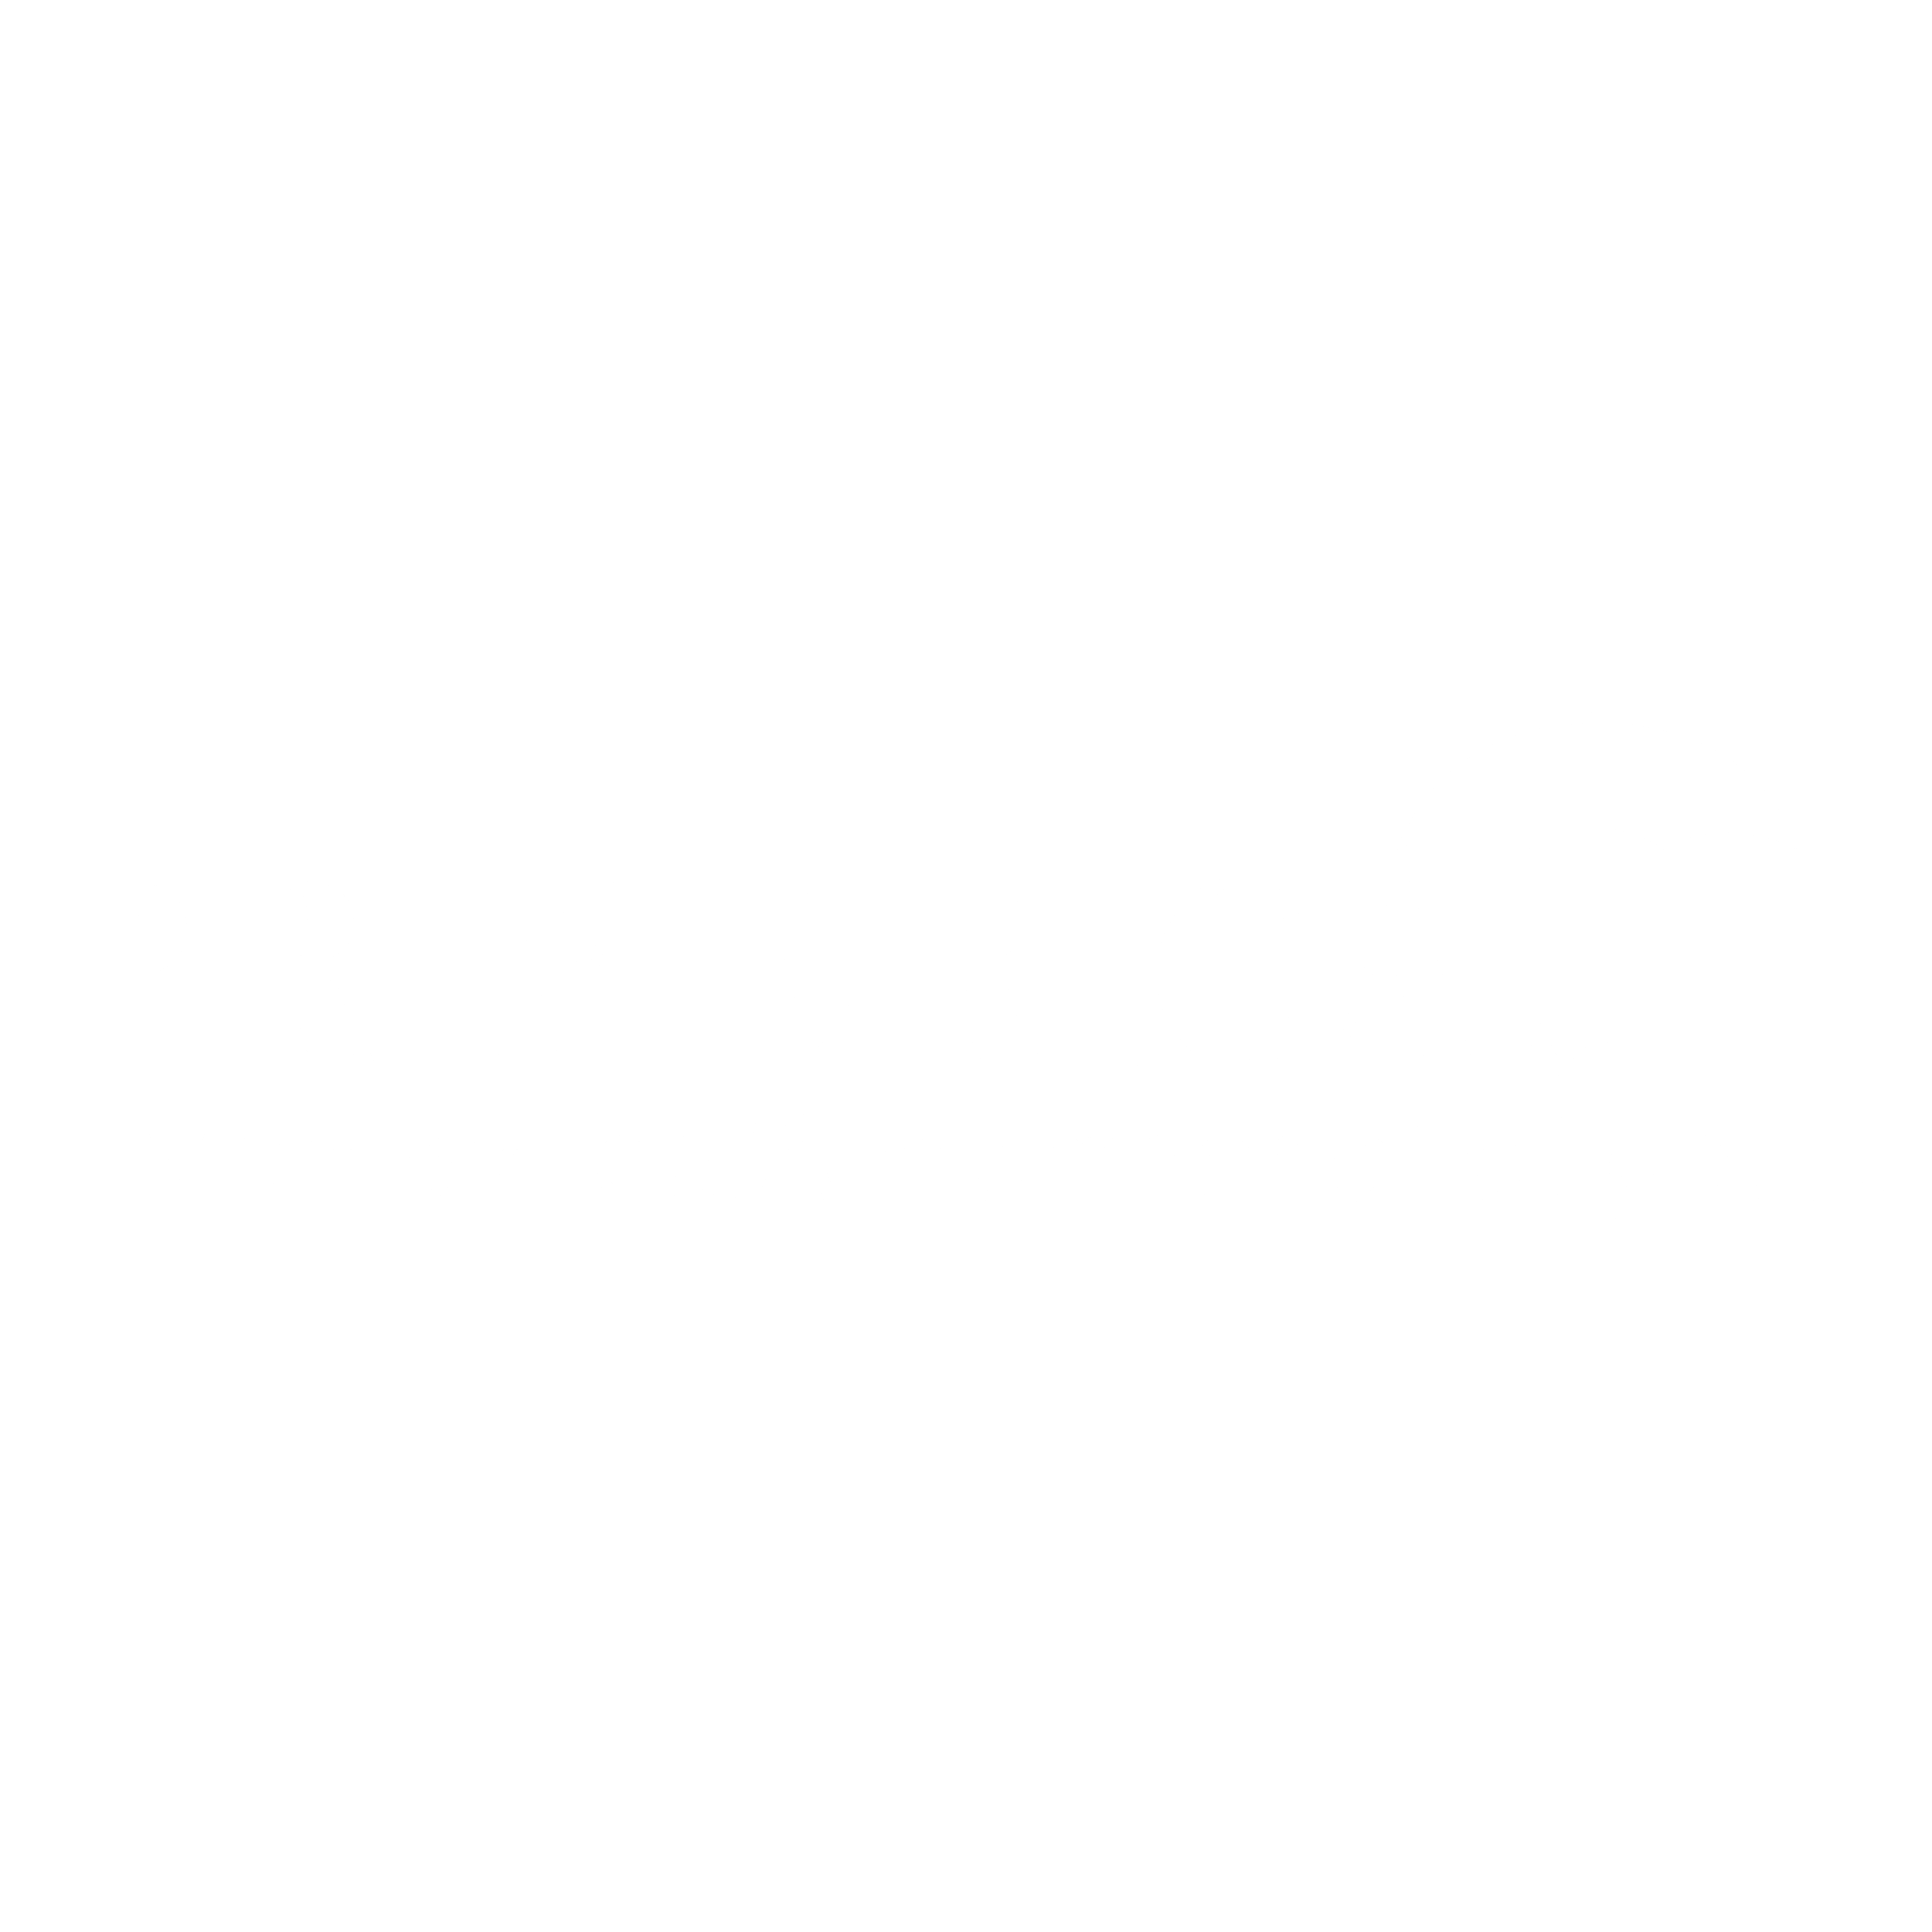 Prime America Logo - Primerica Logo PNG Transparent & SVG Vector - Freebie Supply